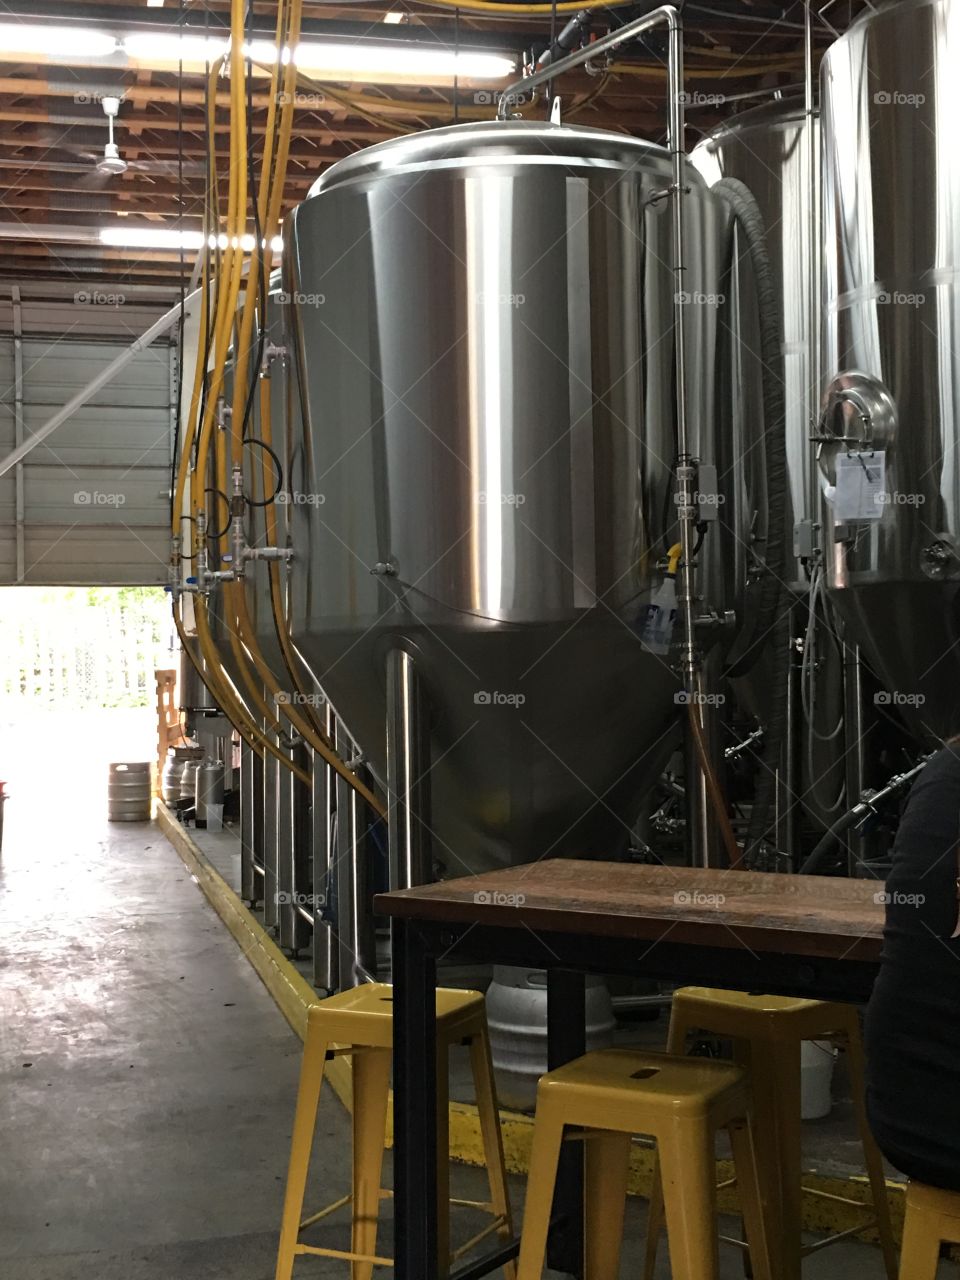 Microbrewery craft beer brew tanks stainless steel